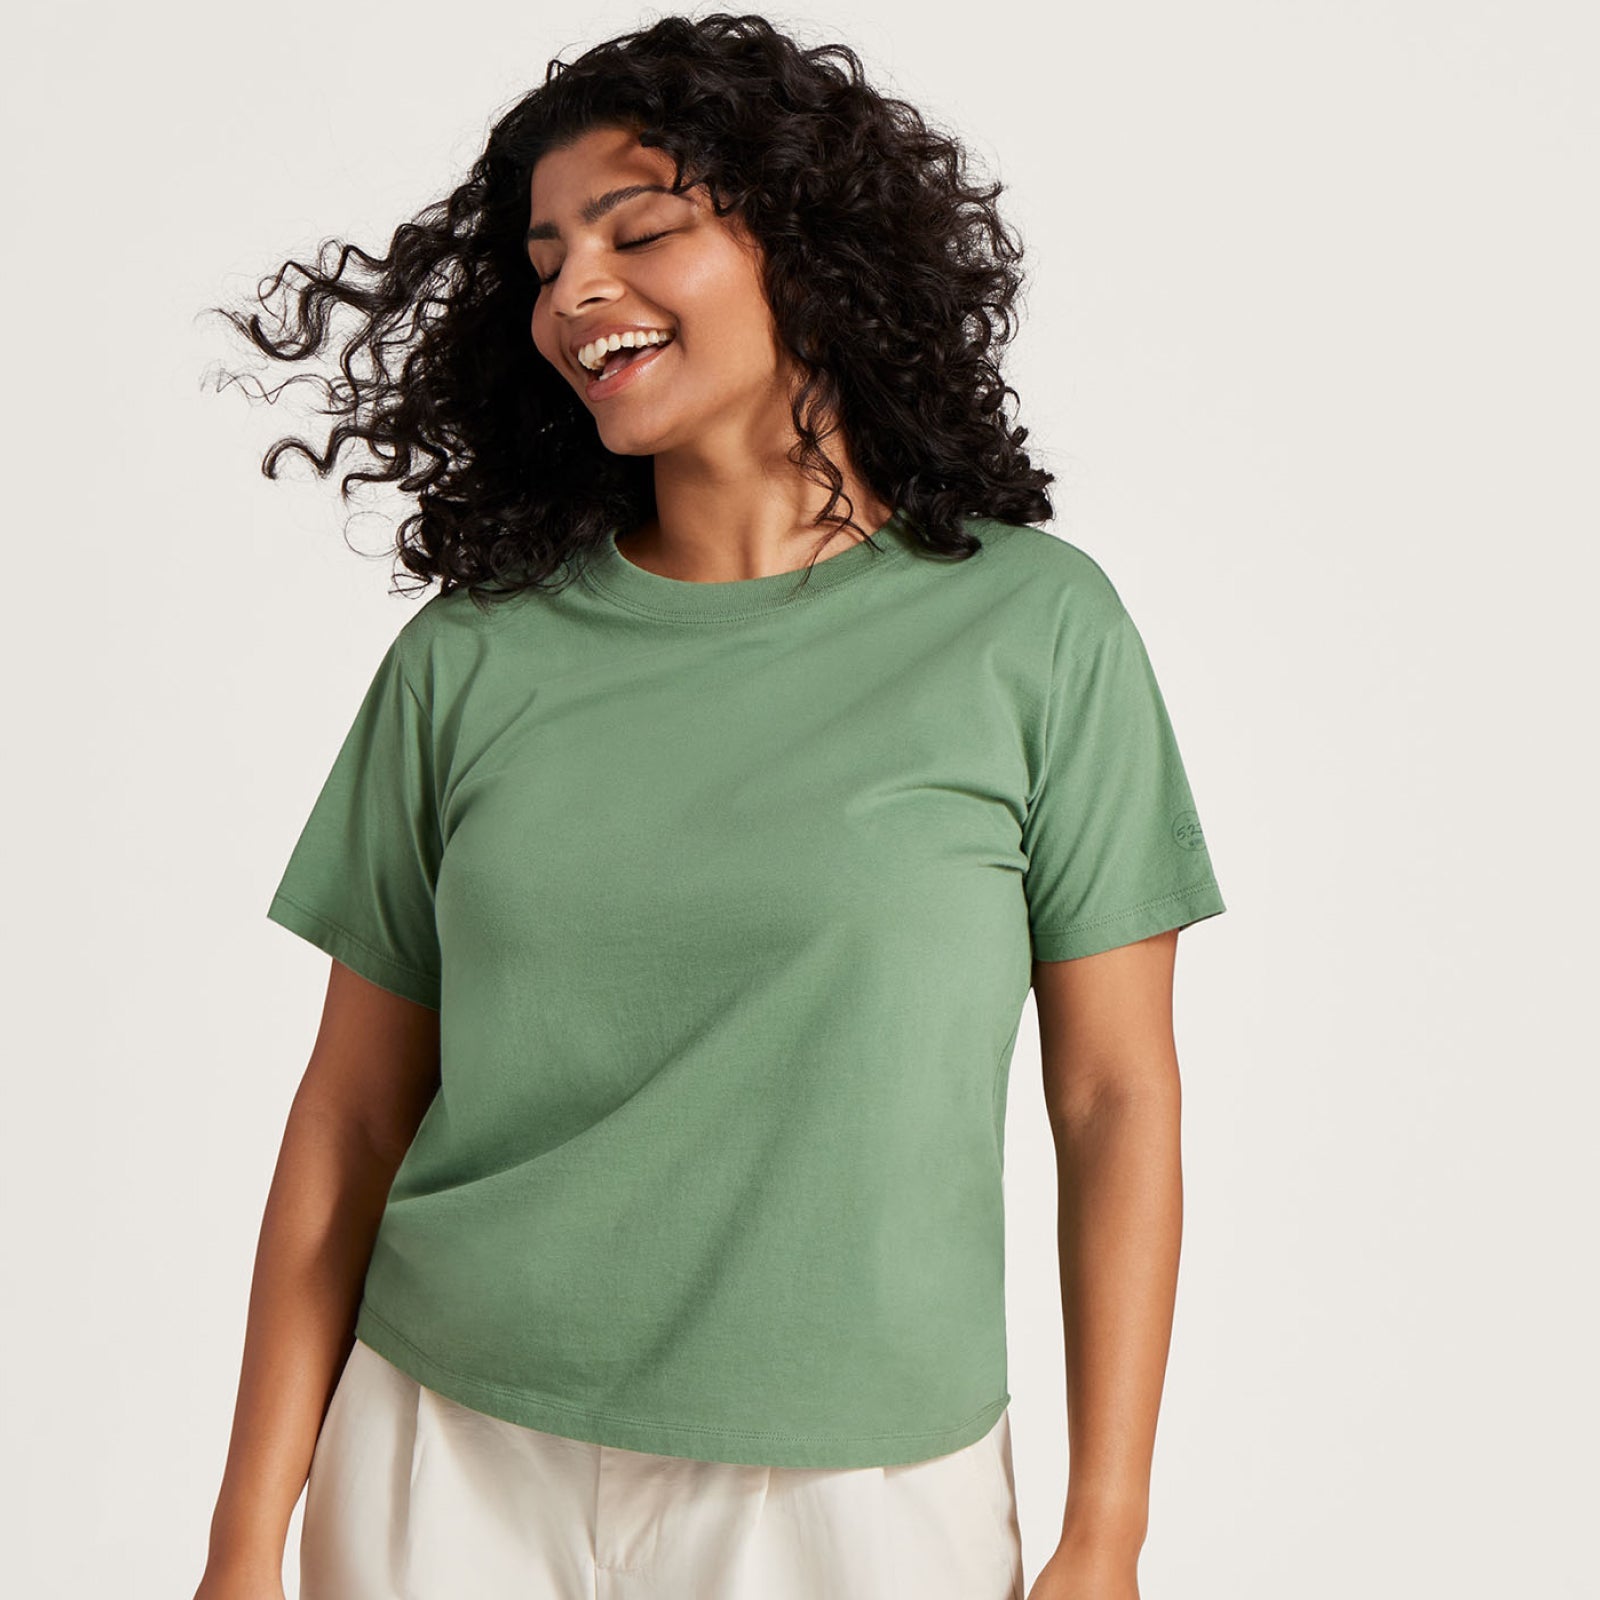 Allbirds Women's Tops  Earth-Friendly Shirts, Tanks & Button-ups